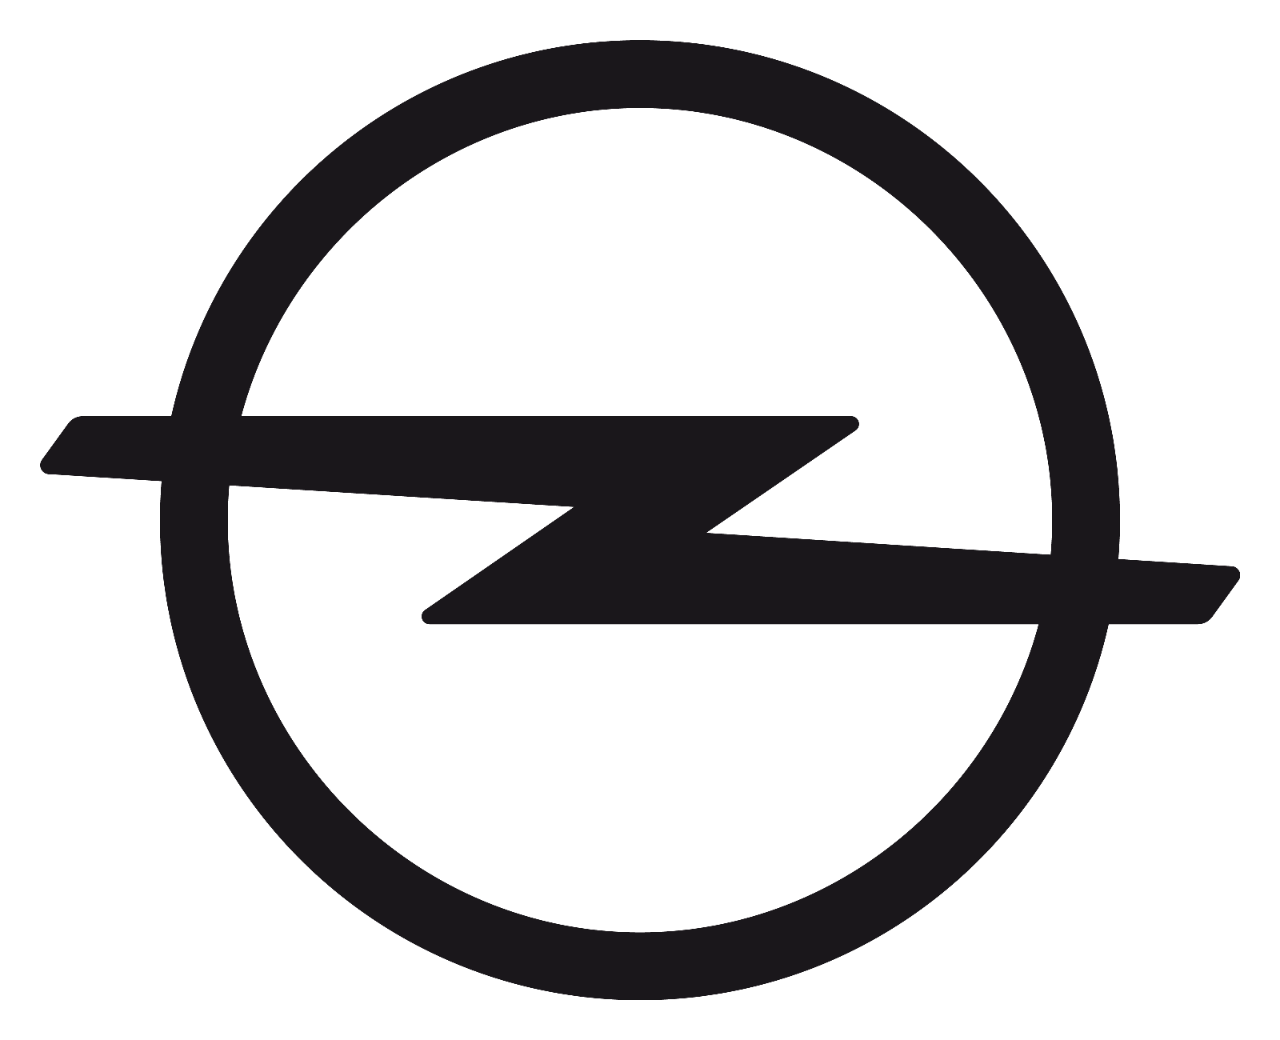 Opel logosu